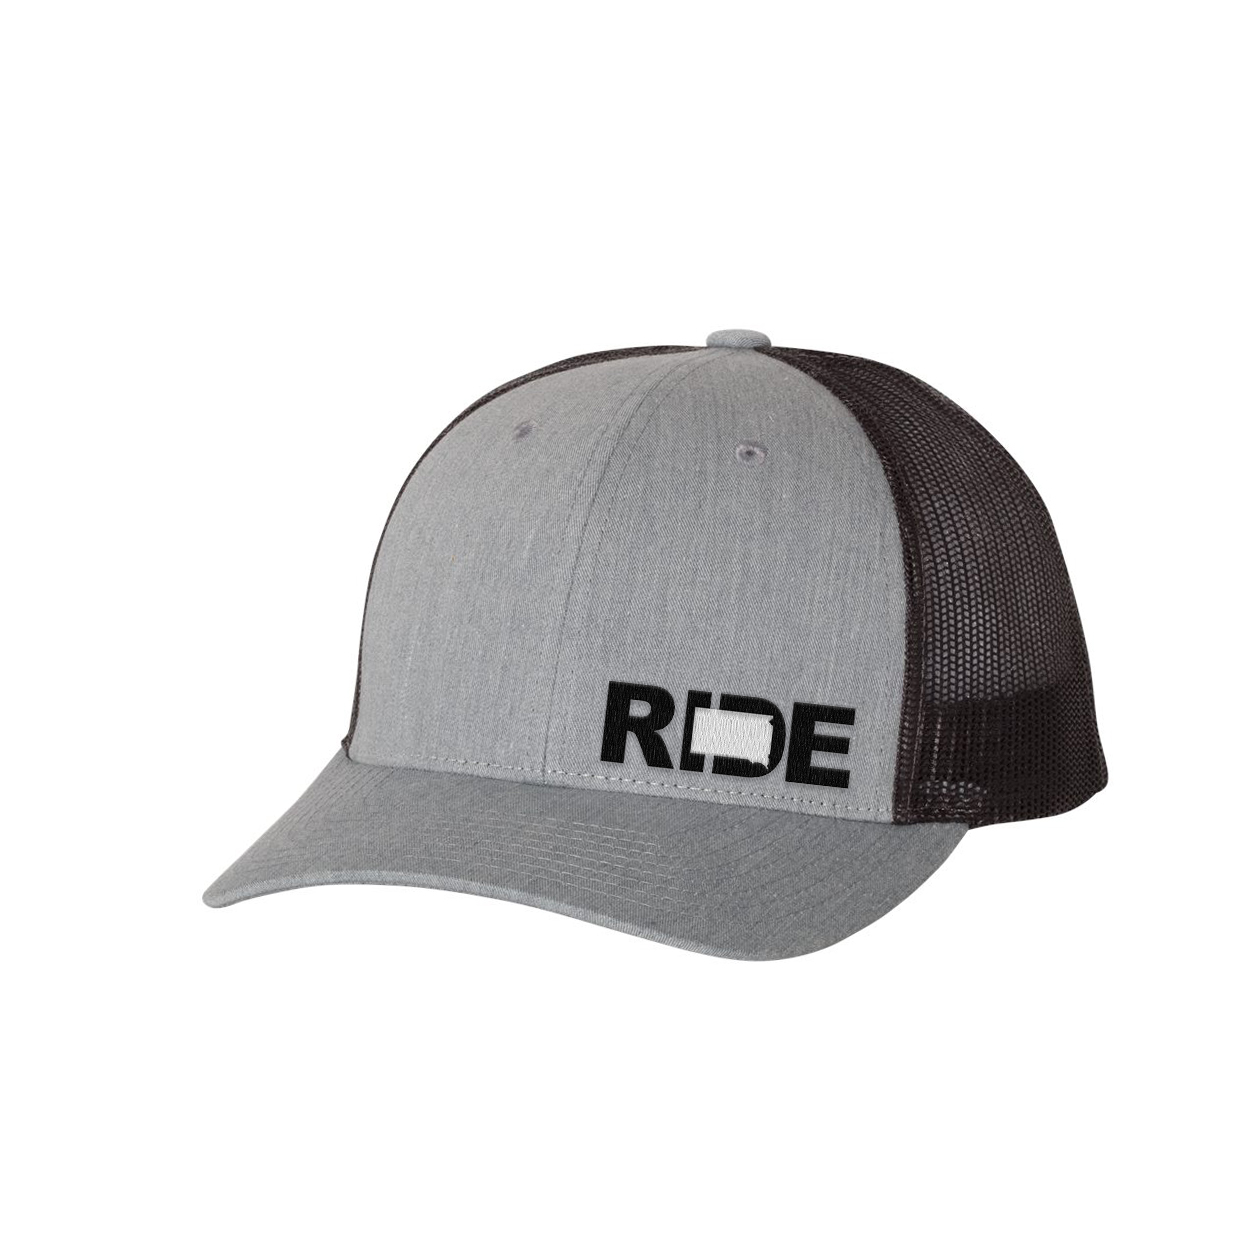 Ride South Dakota Night Out Embroidered Snapback Trucker Hat Heather Gray/Black